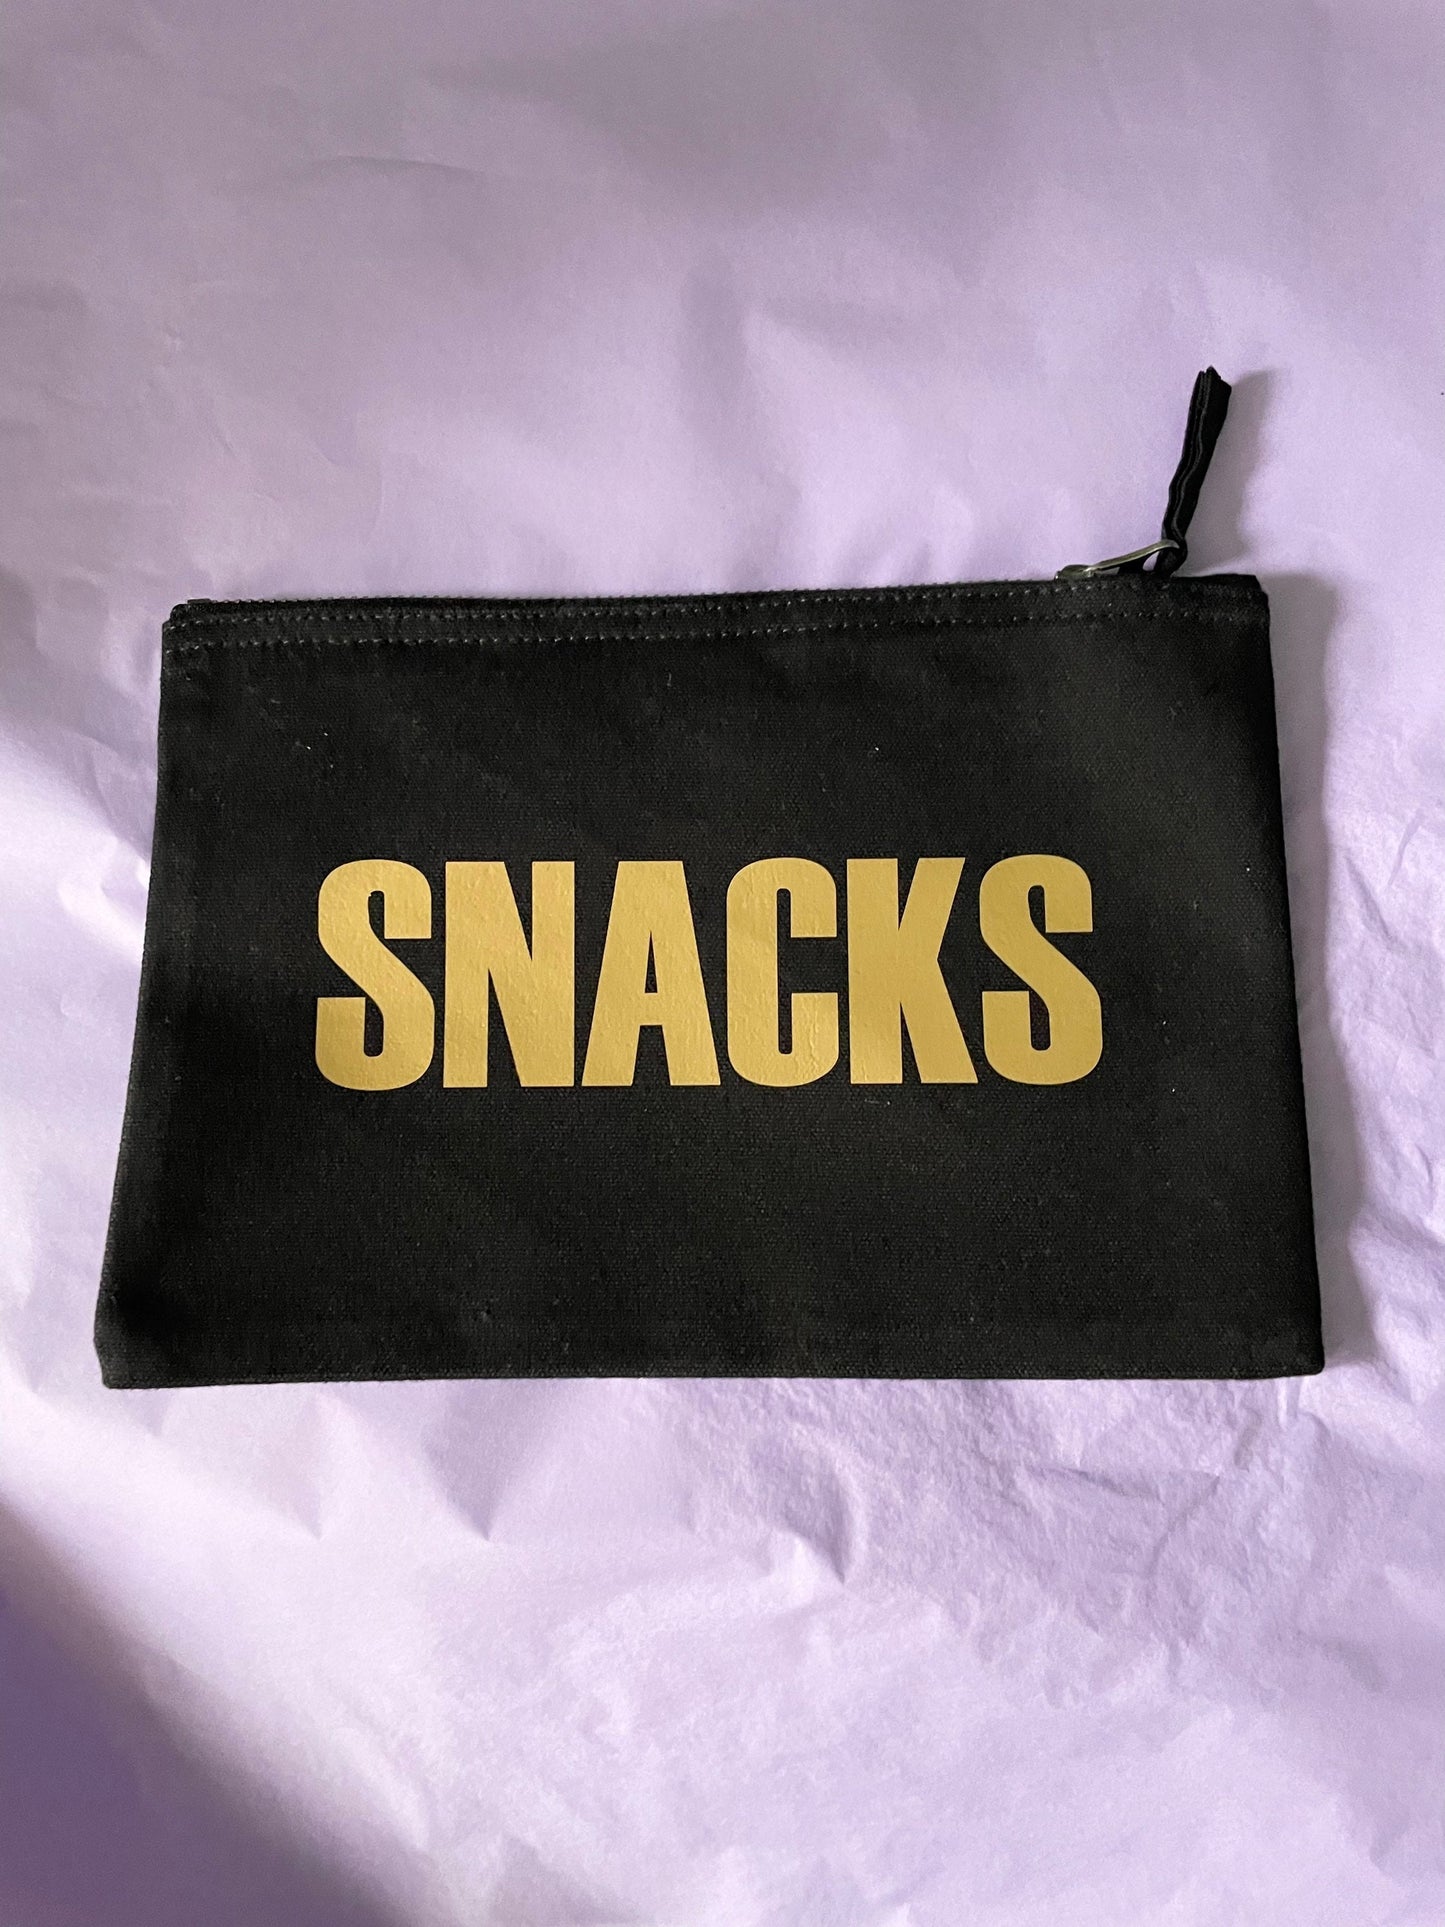 Snack bag, travel snacks pouch, black handbag organiser, gift for mums, mum present, kids snack bag, gift for him, food storage